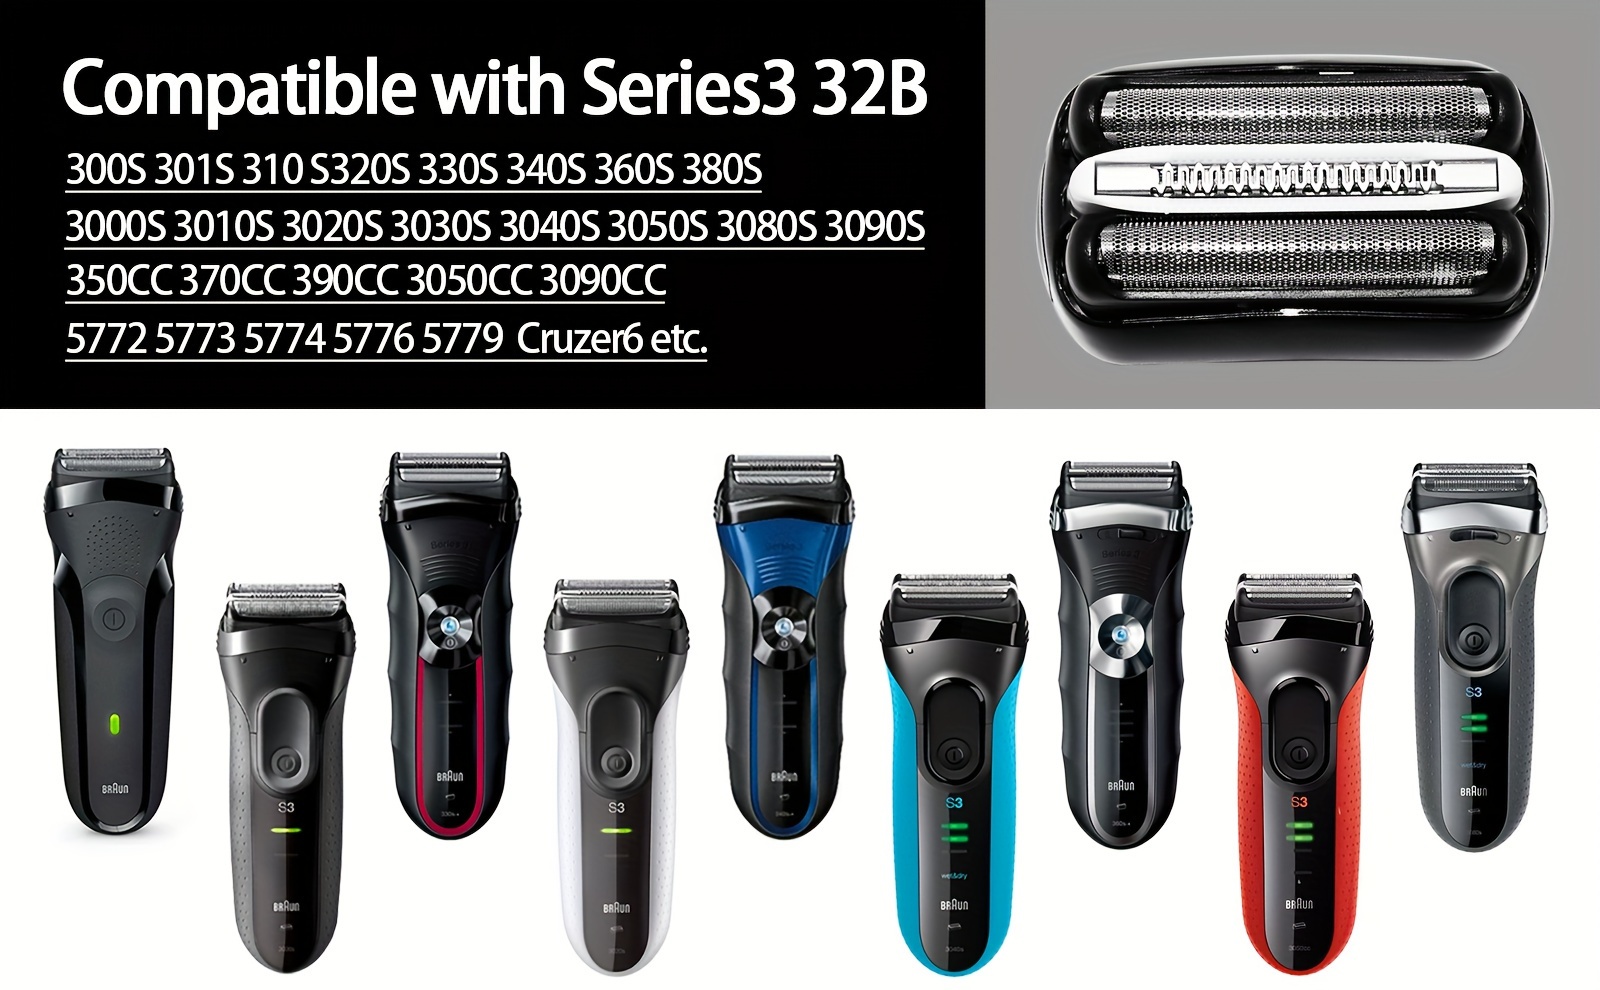 For Braun 32B Series 3 3020S 3040S 300S 350CC 2pcs Shaver